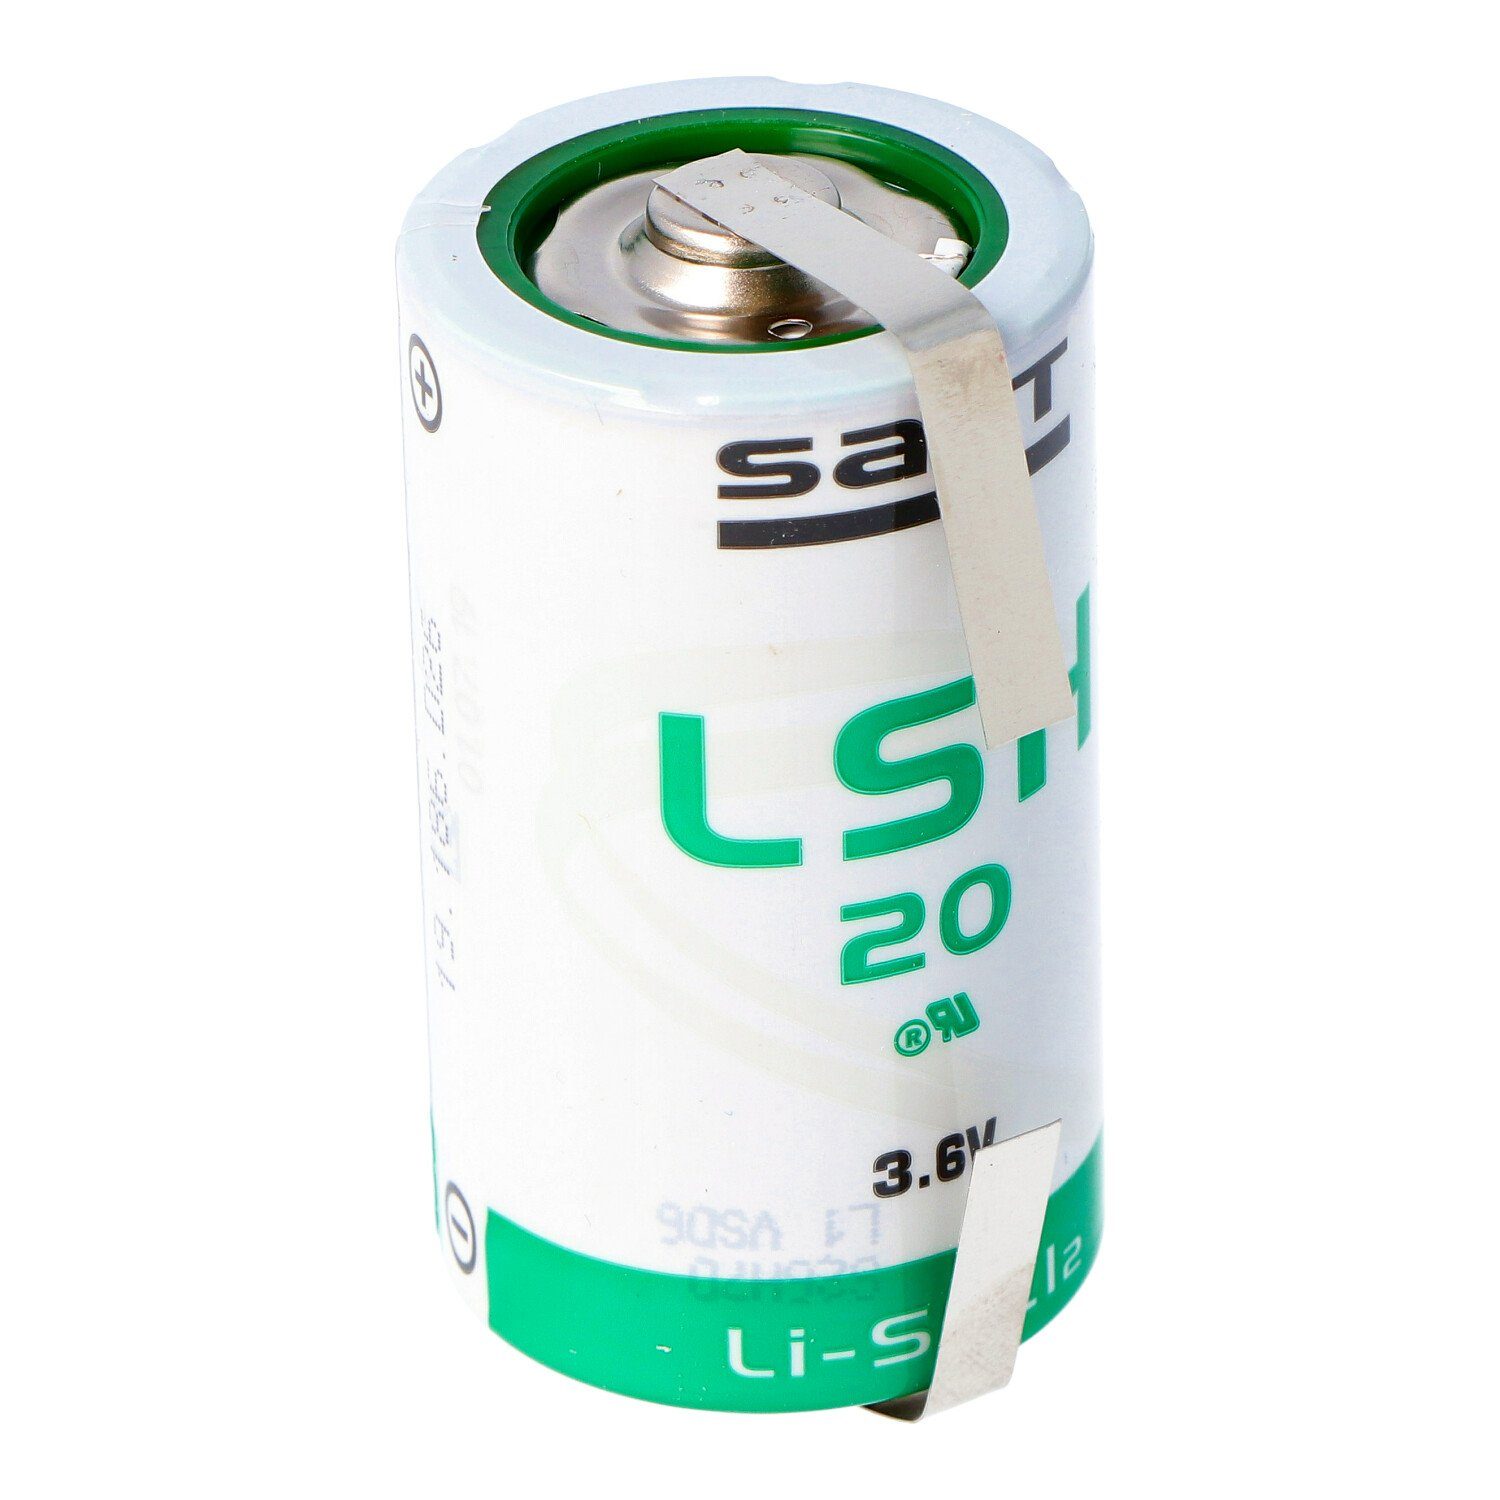 Lithium LSH20 Primary LSH SAFT 3.6V V) 20 U-Lötfahnen mit Batterie, Saft Batterie (3,6